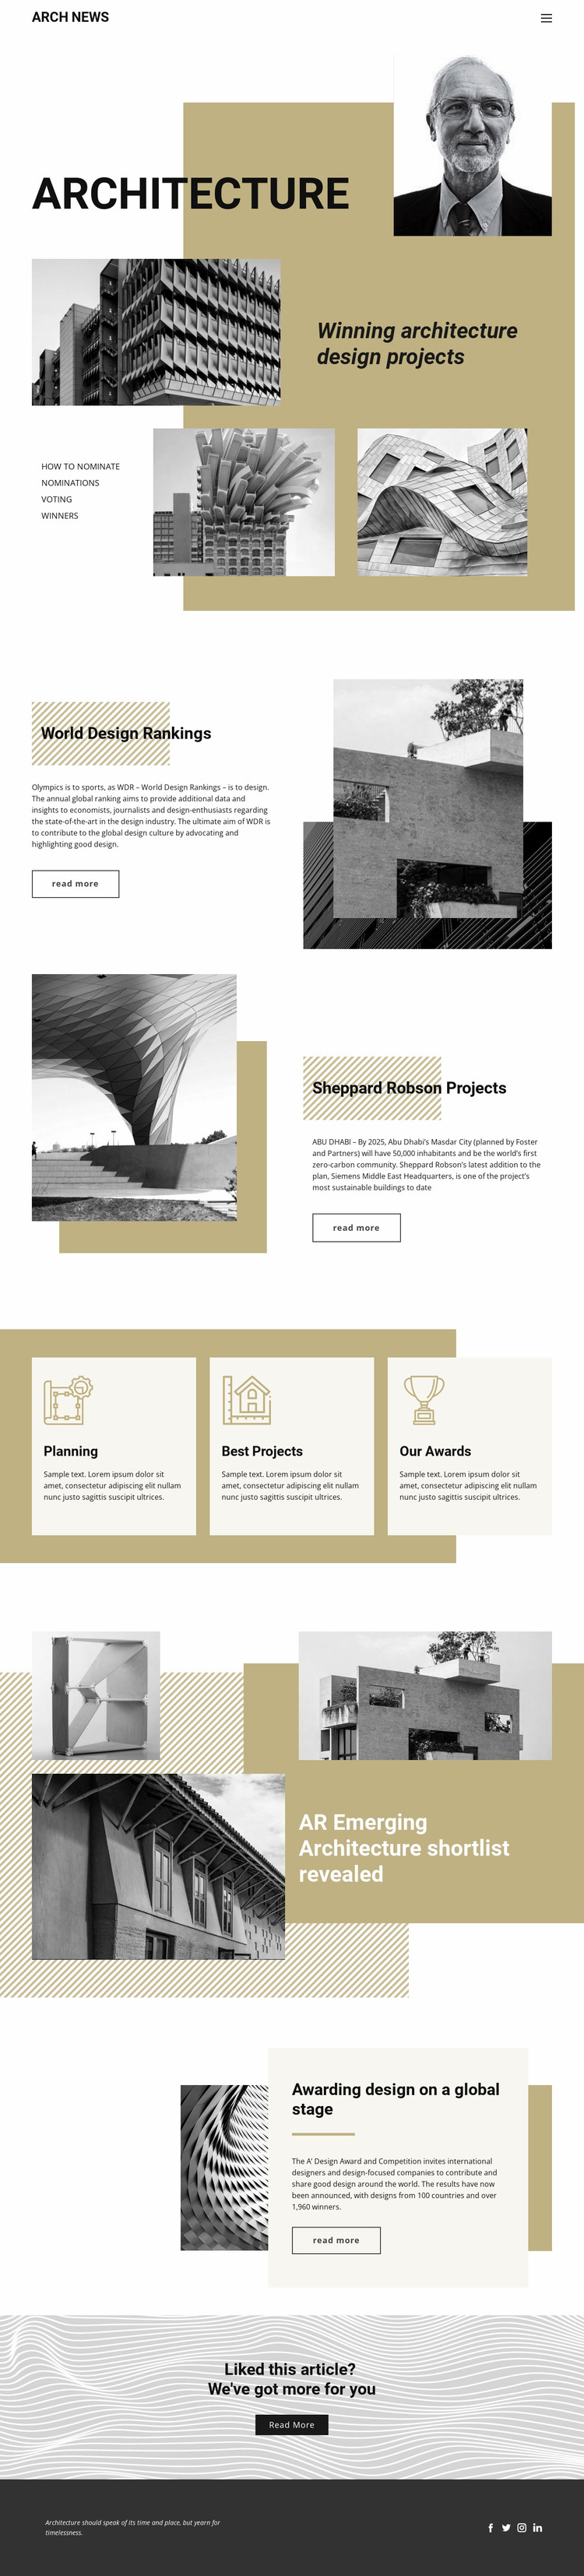 Design of Architecture Website Mockup